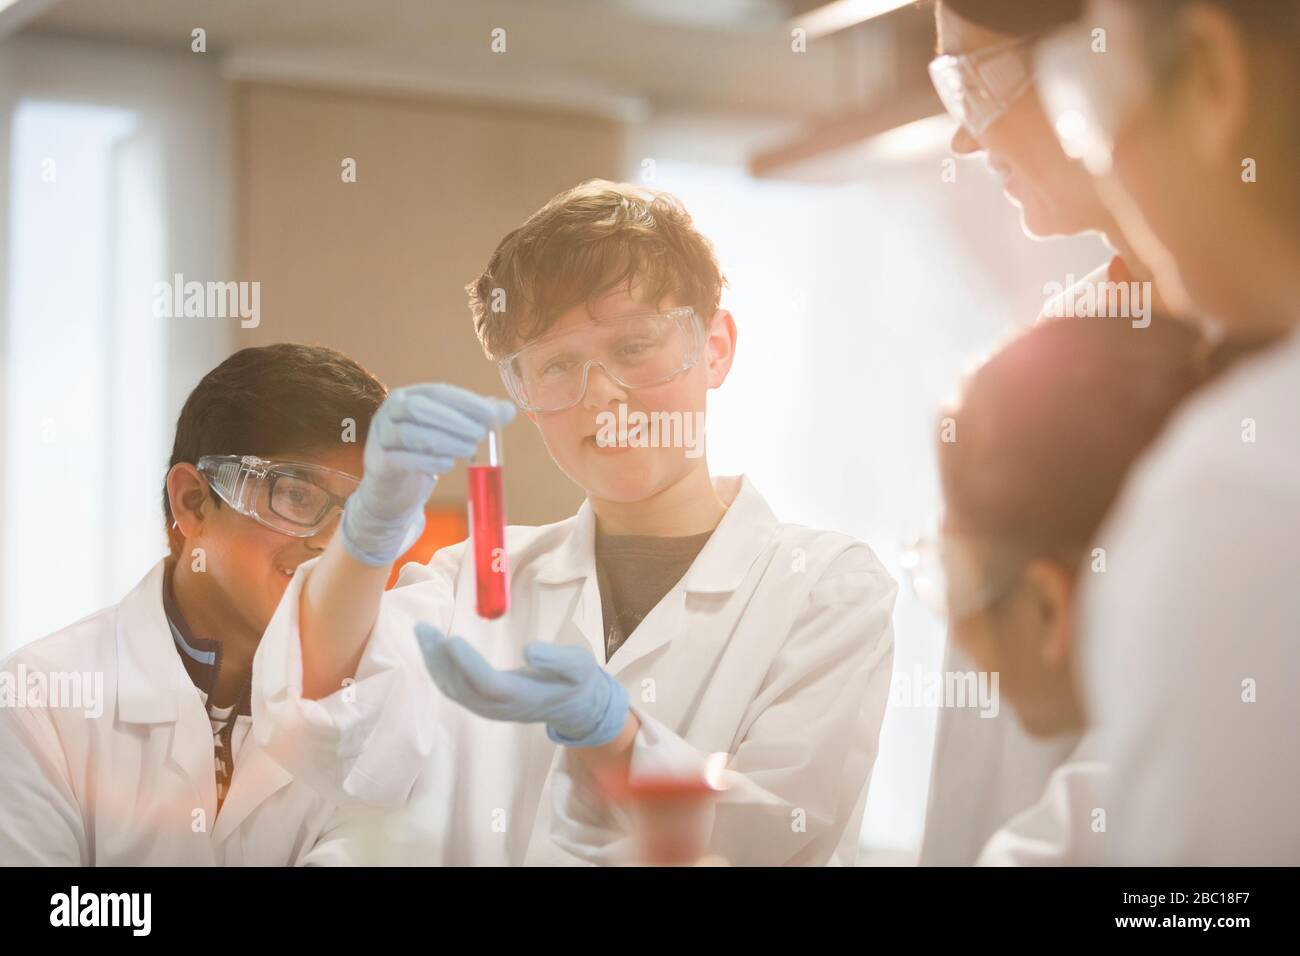 Students examining liquid in test tube, conducting scientific experiment in laboratory classroom Stock Photo